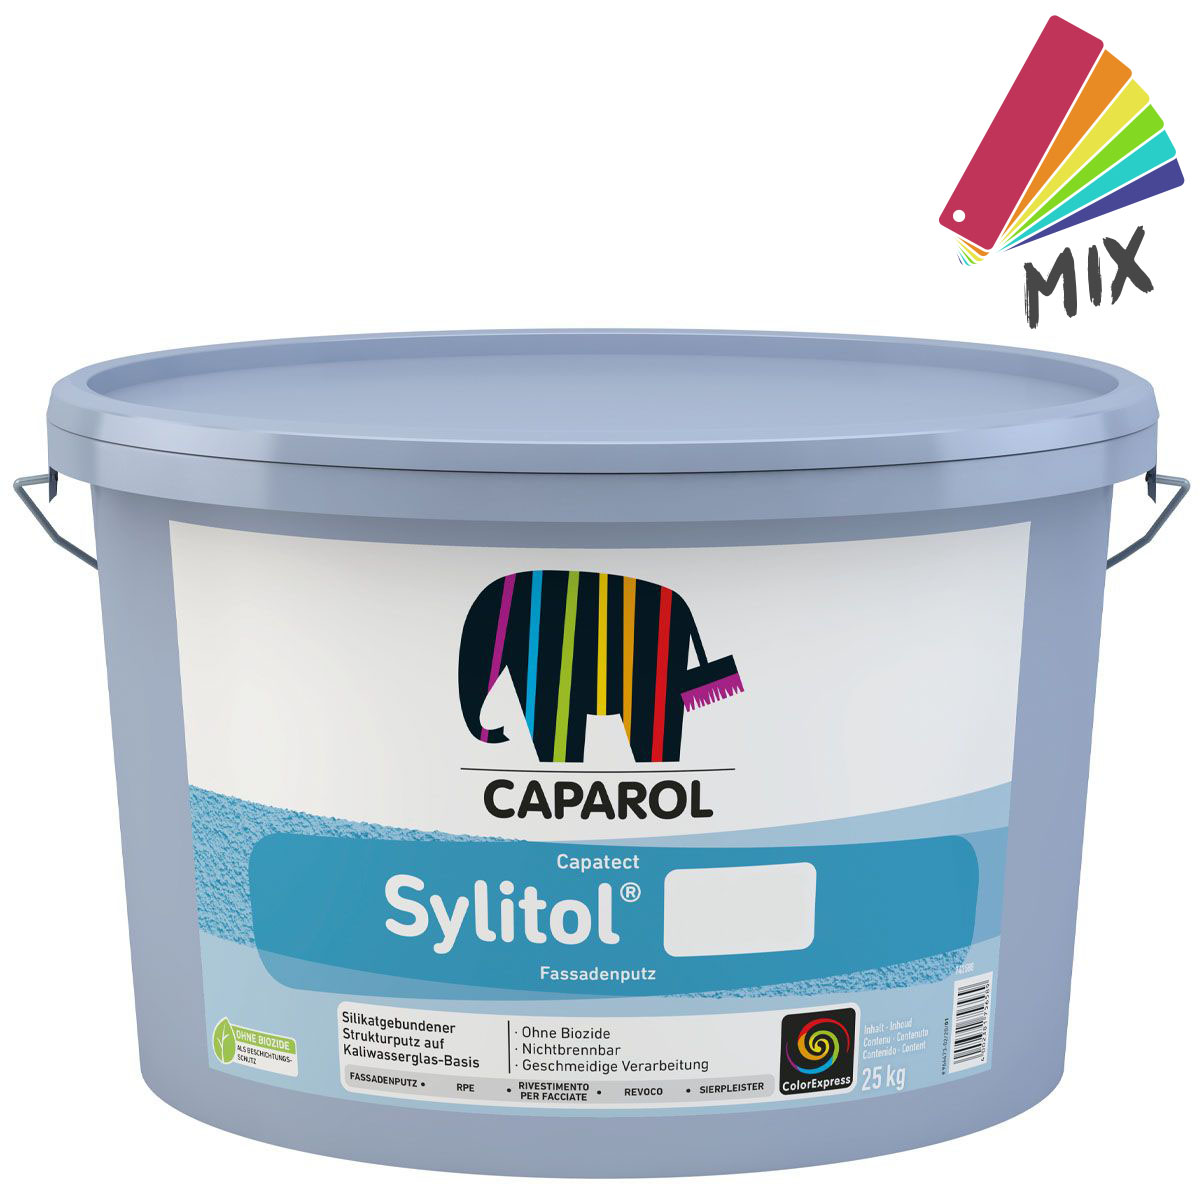 Caparol Capatect Sylitol Fassadenputz R30 (3mm) 25kg, PG S wunschfarbton